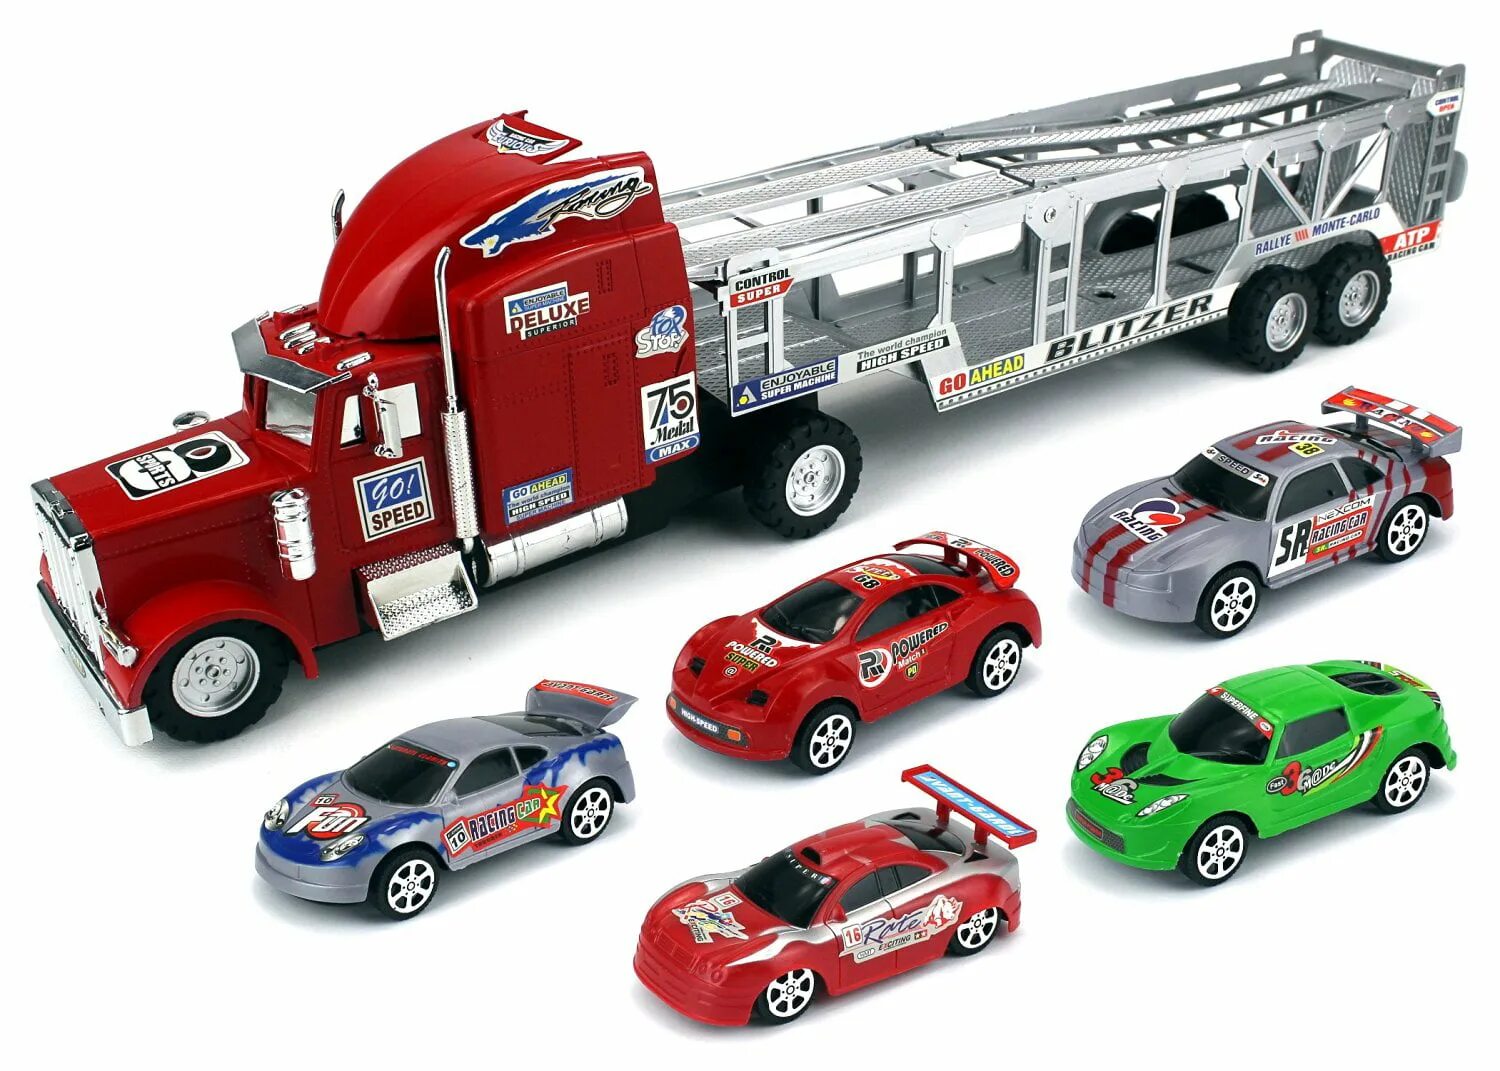 Truck toy cars. Автовоз игрушка с машинками. Игрушка грузовик автовоз. Автовоз Truck игрушка. Автовоз с 5 машинками.